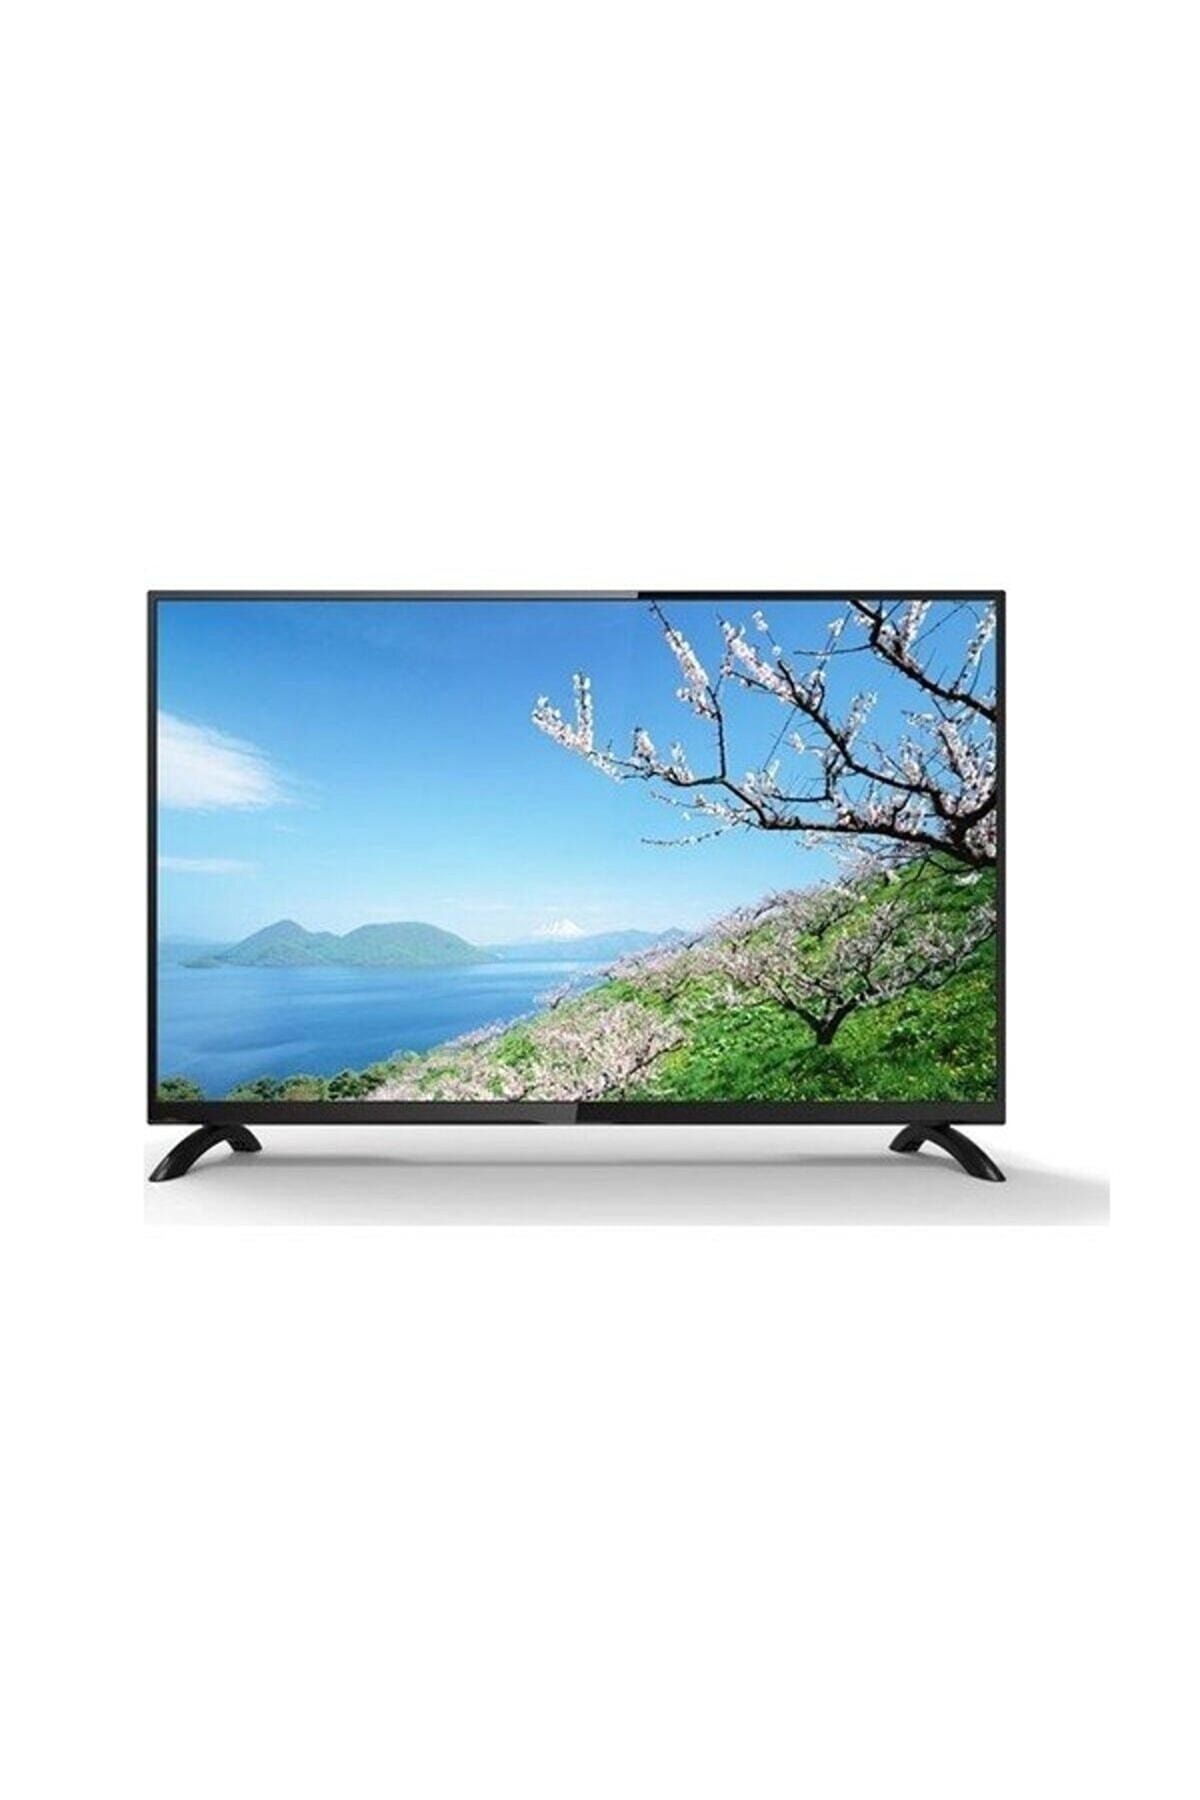 Blaupunkt Tv Bl50145g 4k Android Smart Full (yeni Versiyon Ince Kasa)tv